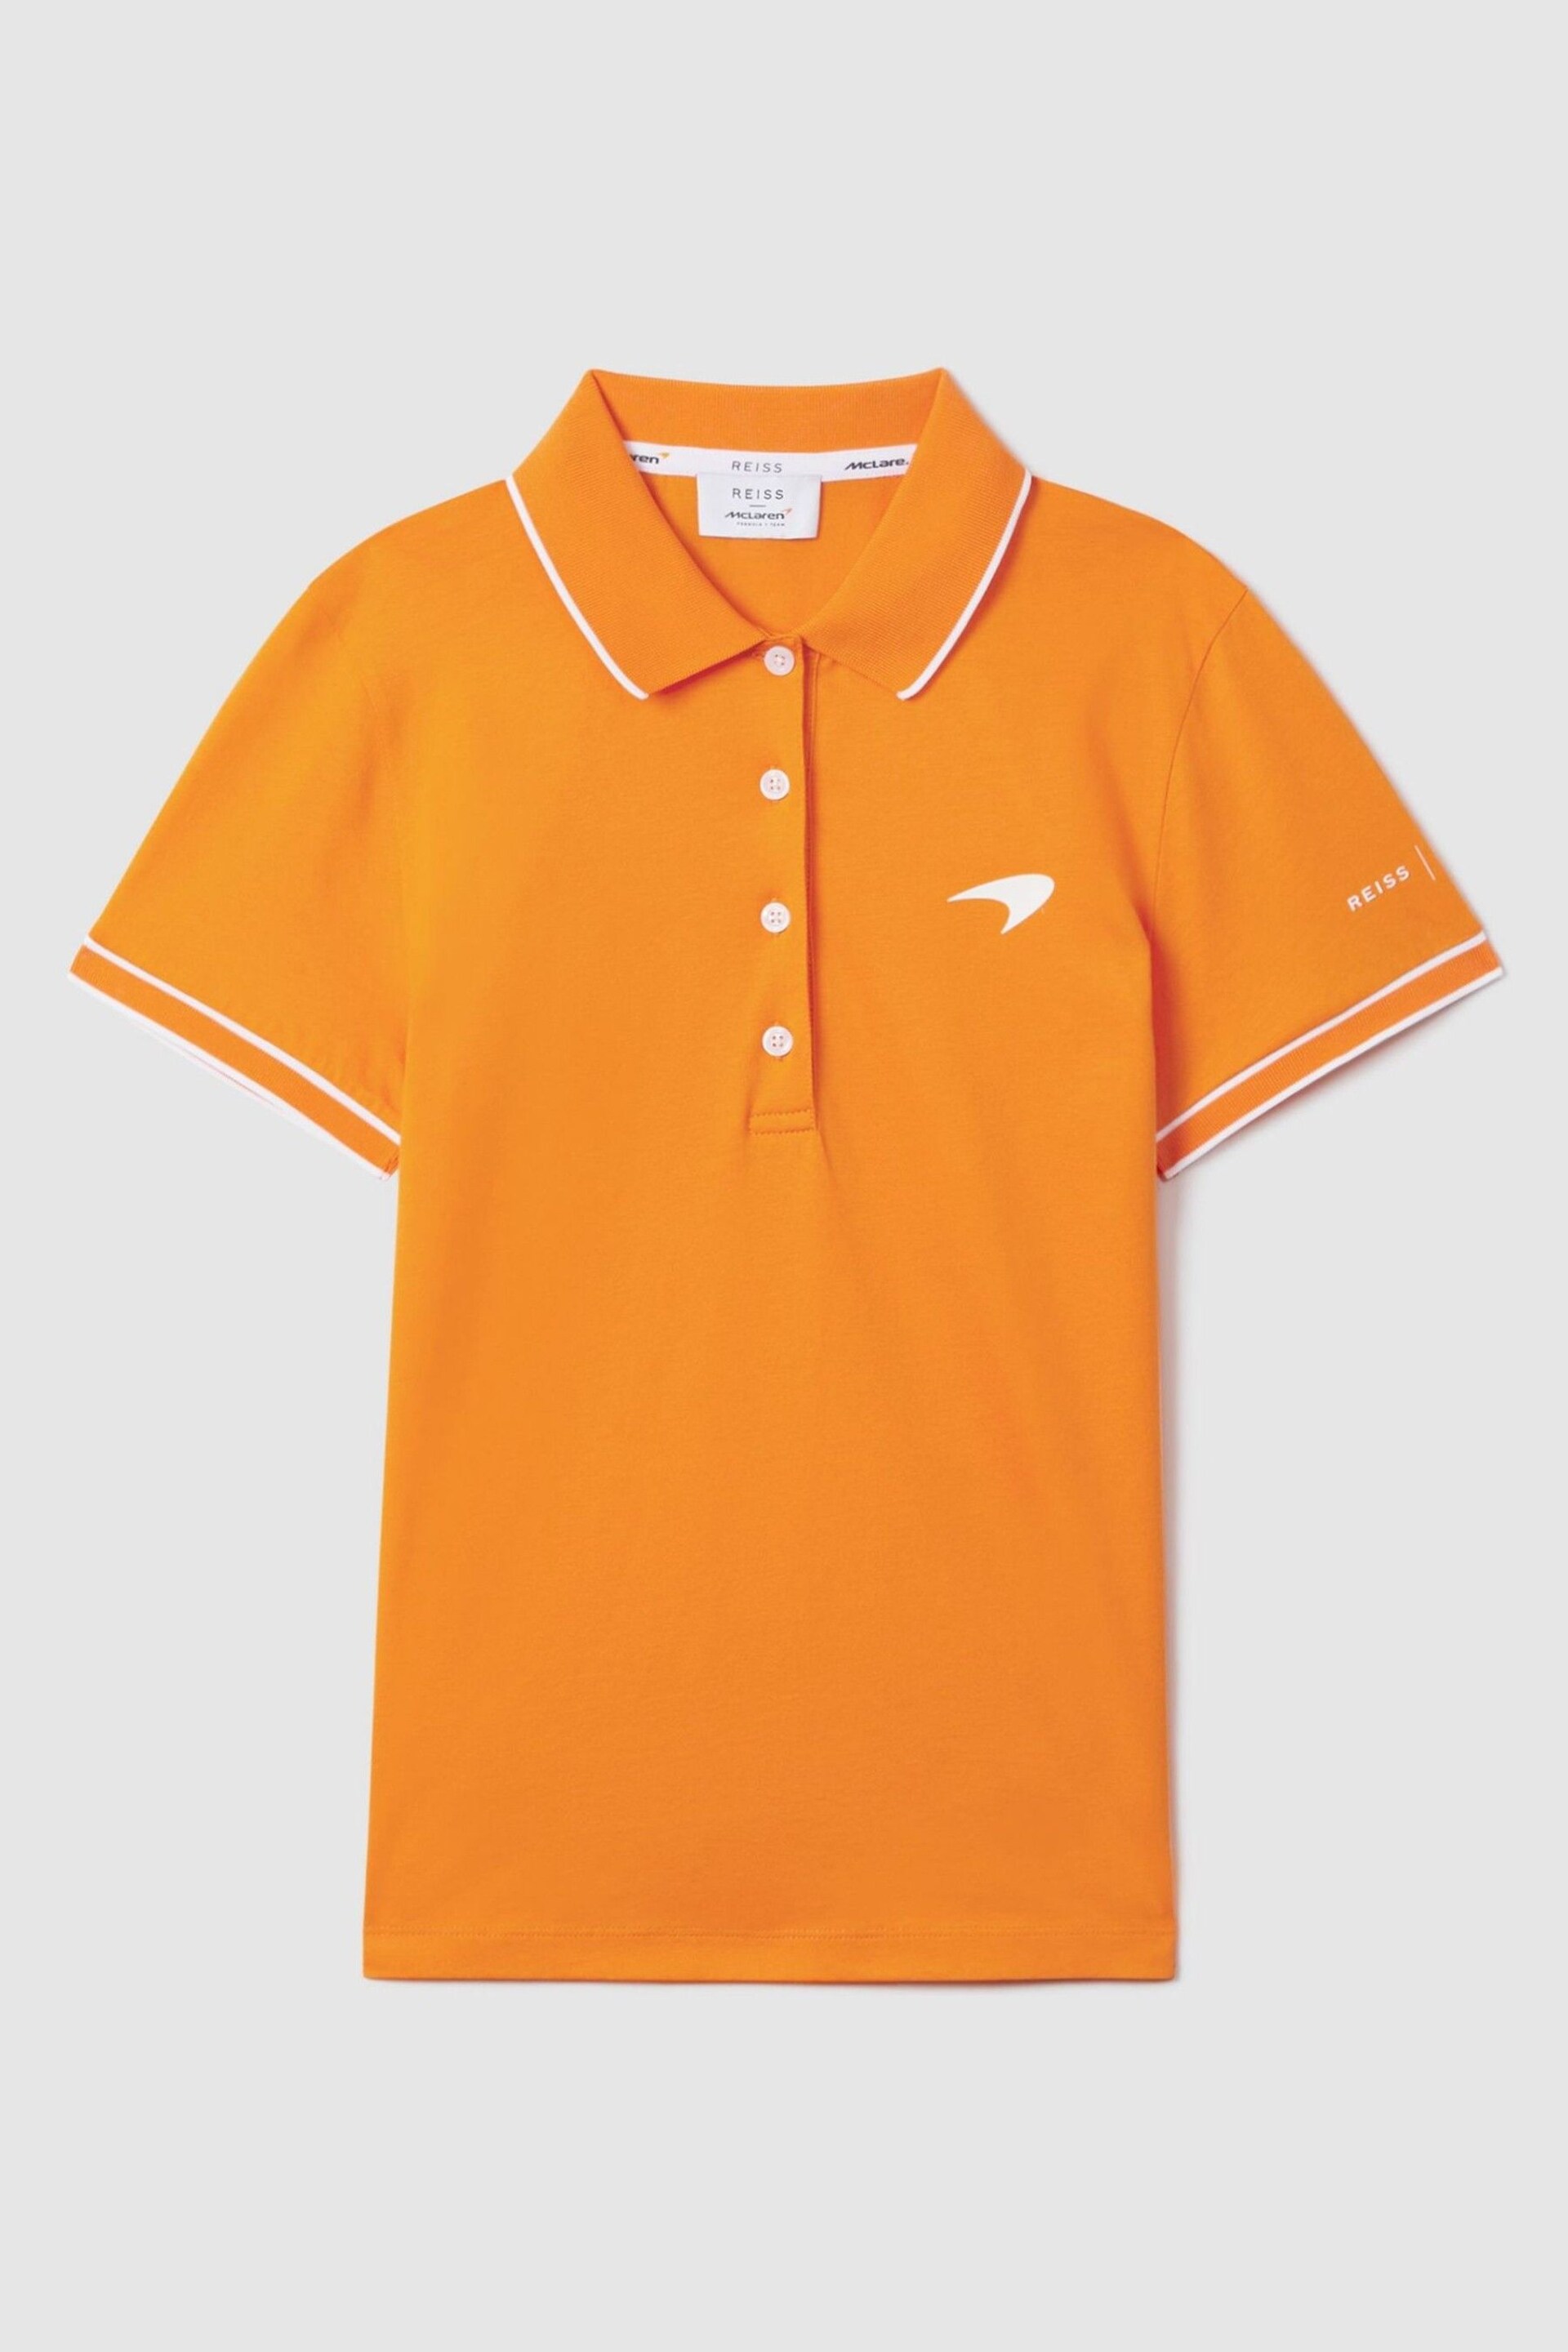 McLaren F1 Mercerised Cotton Polo Shirt - Image 2 of 9